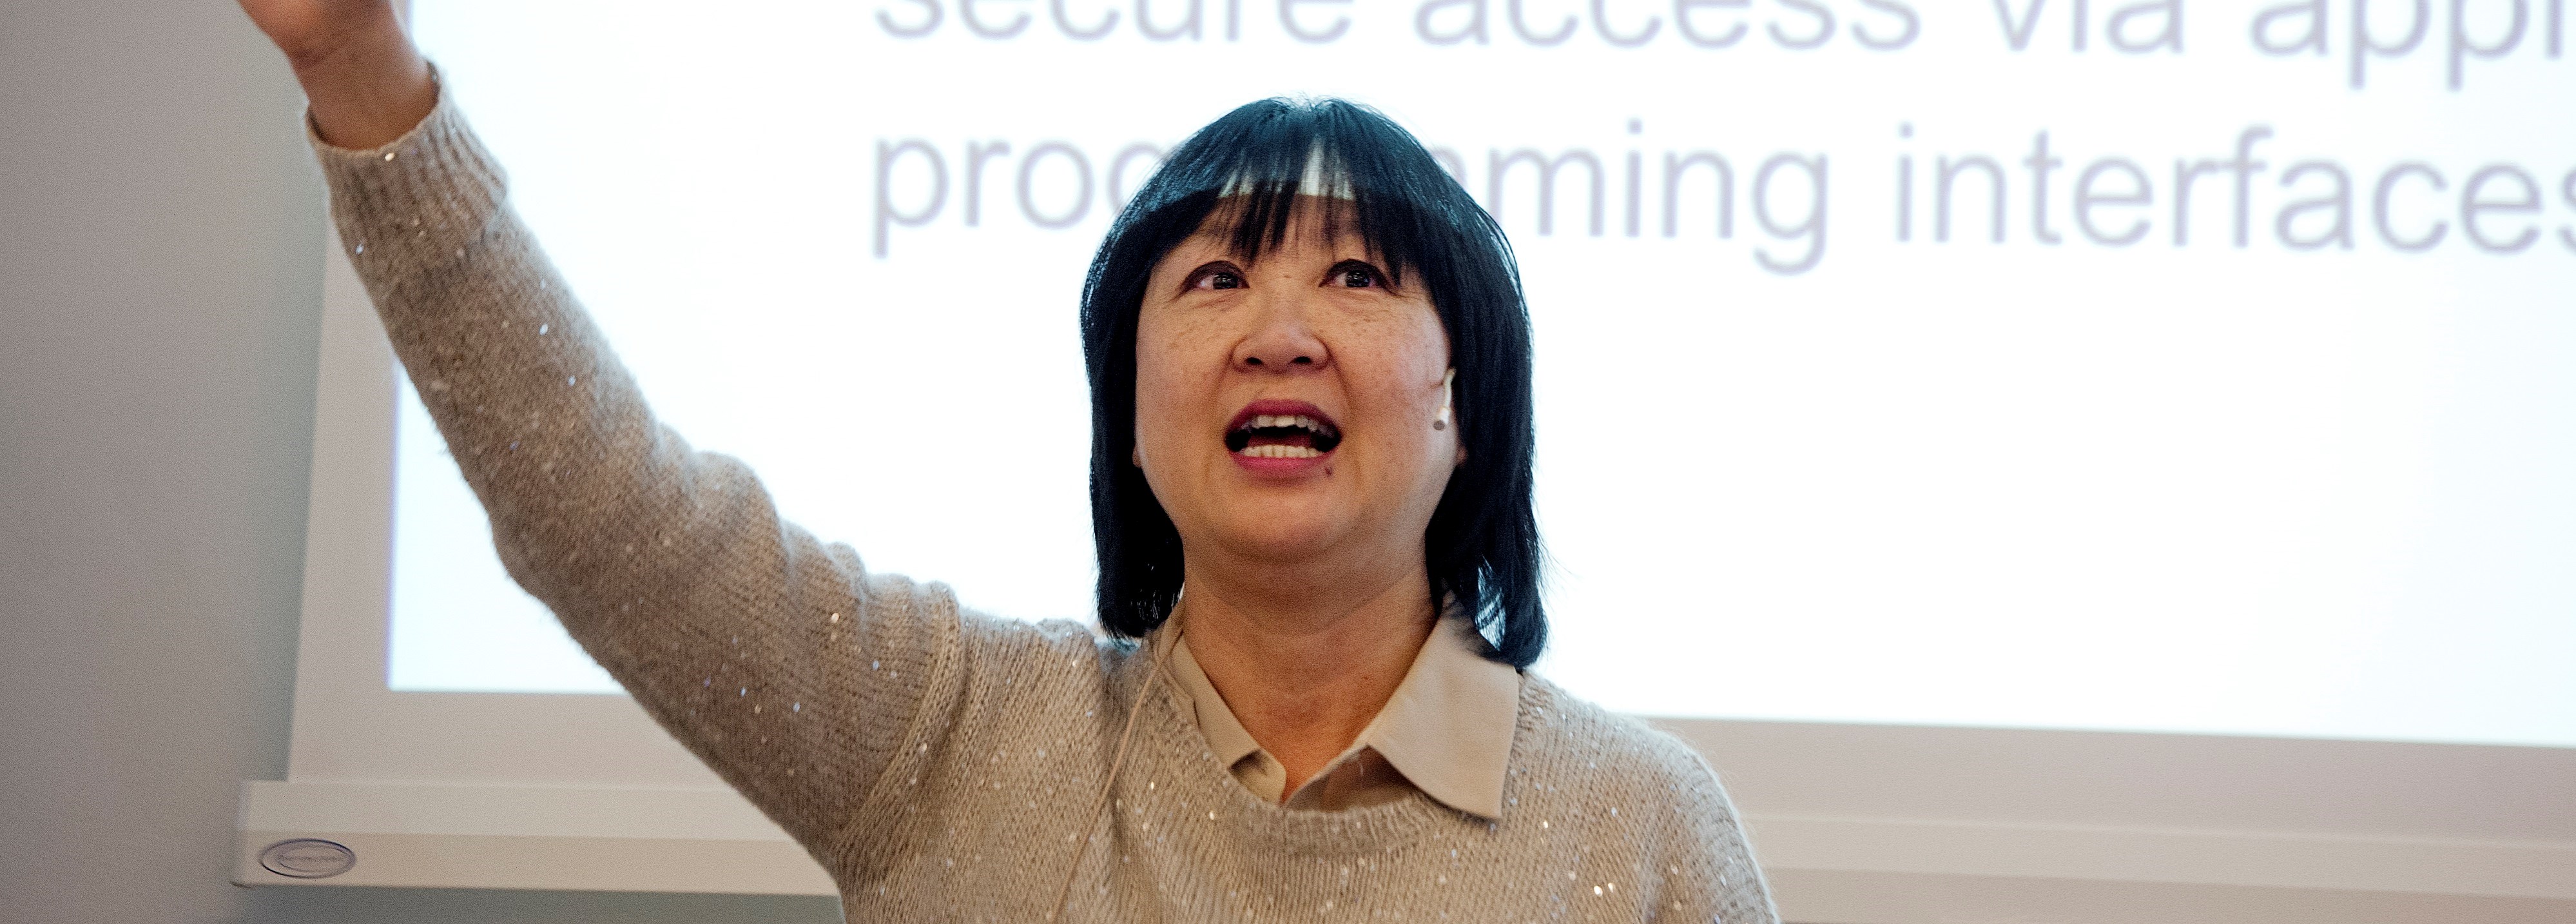 Professor Irene Ng, University of Warwick. 